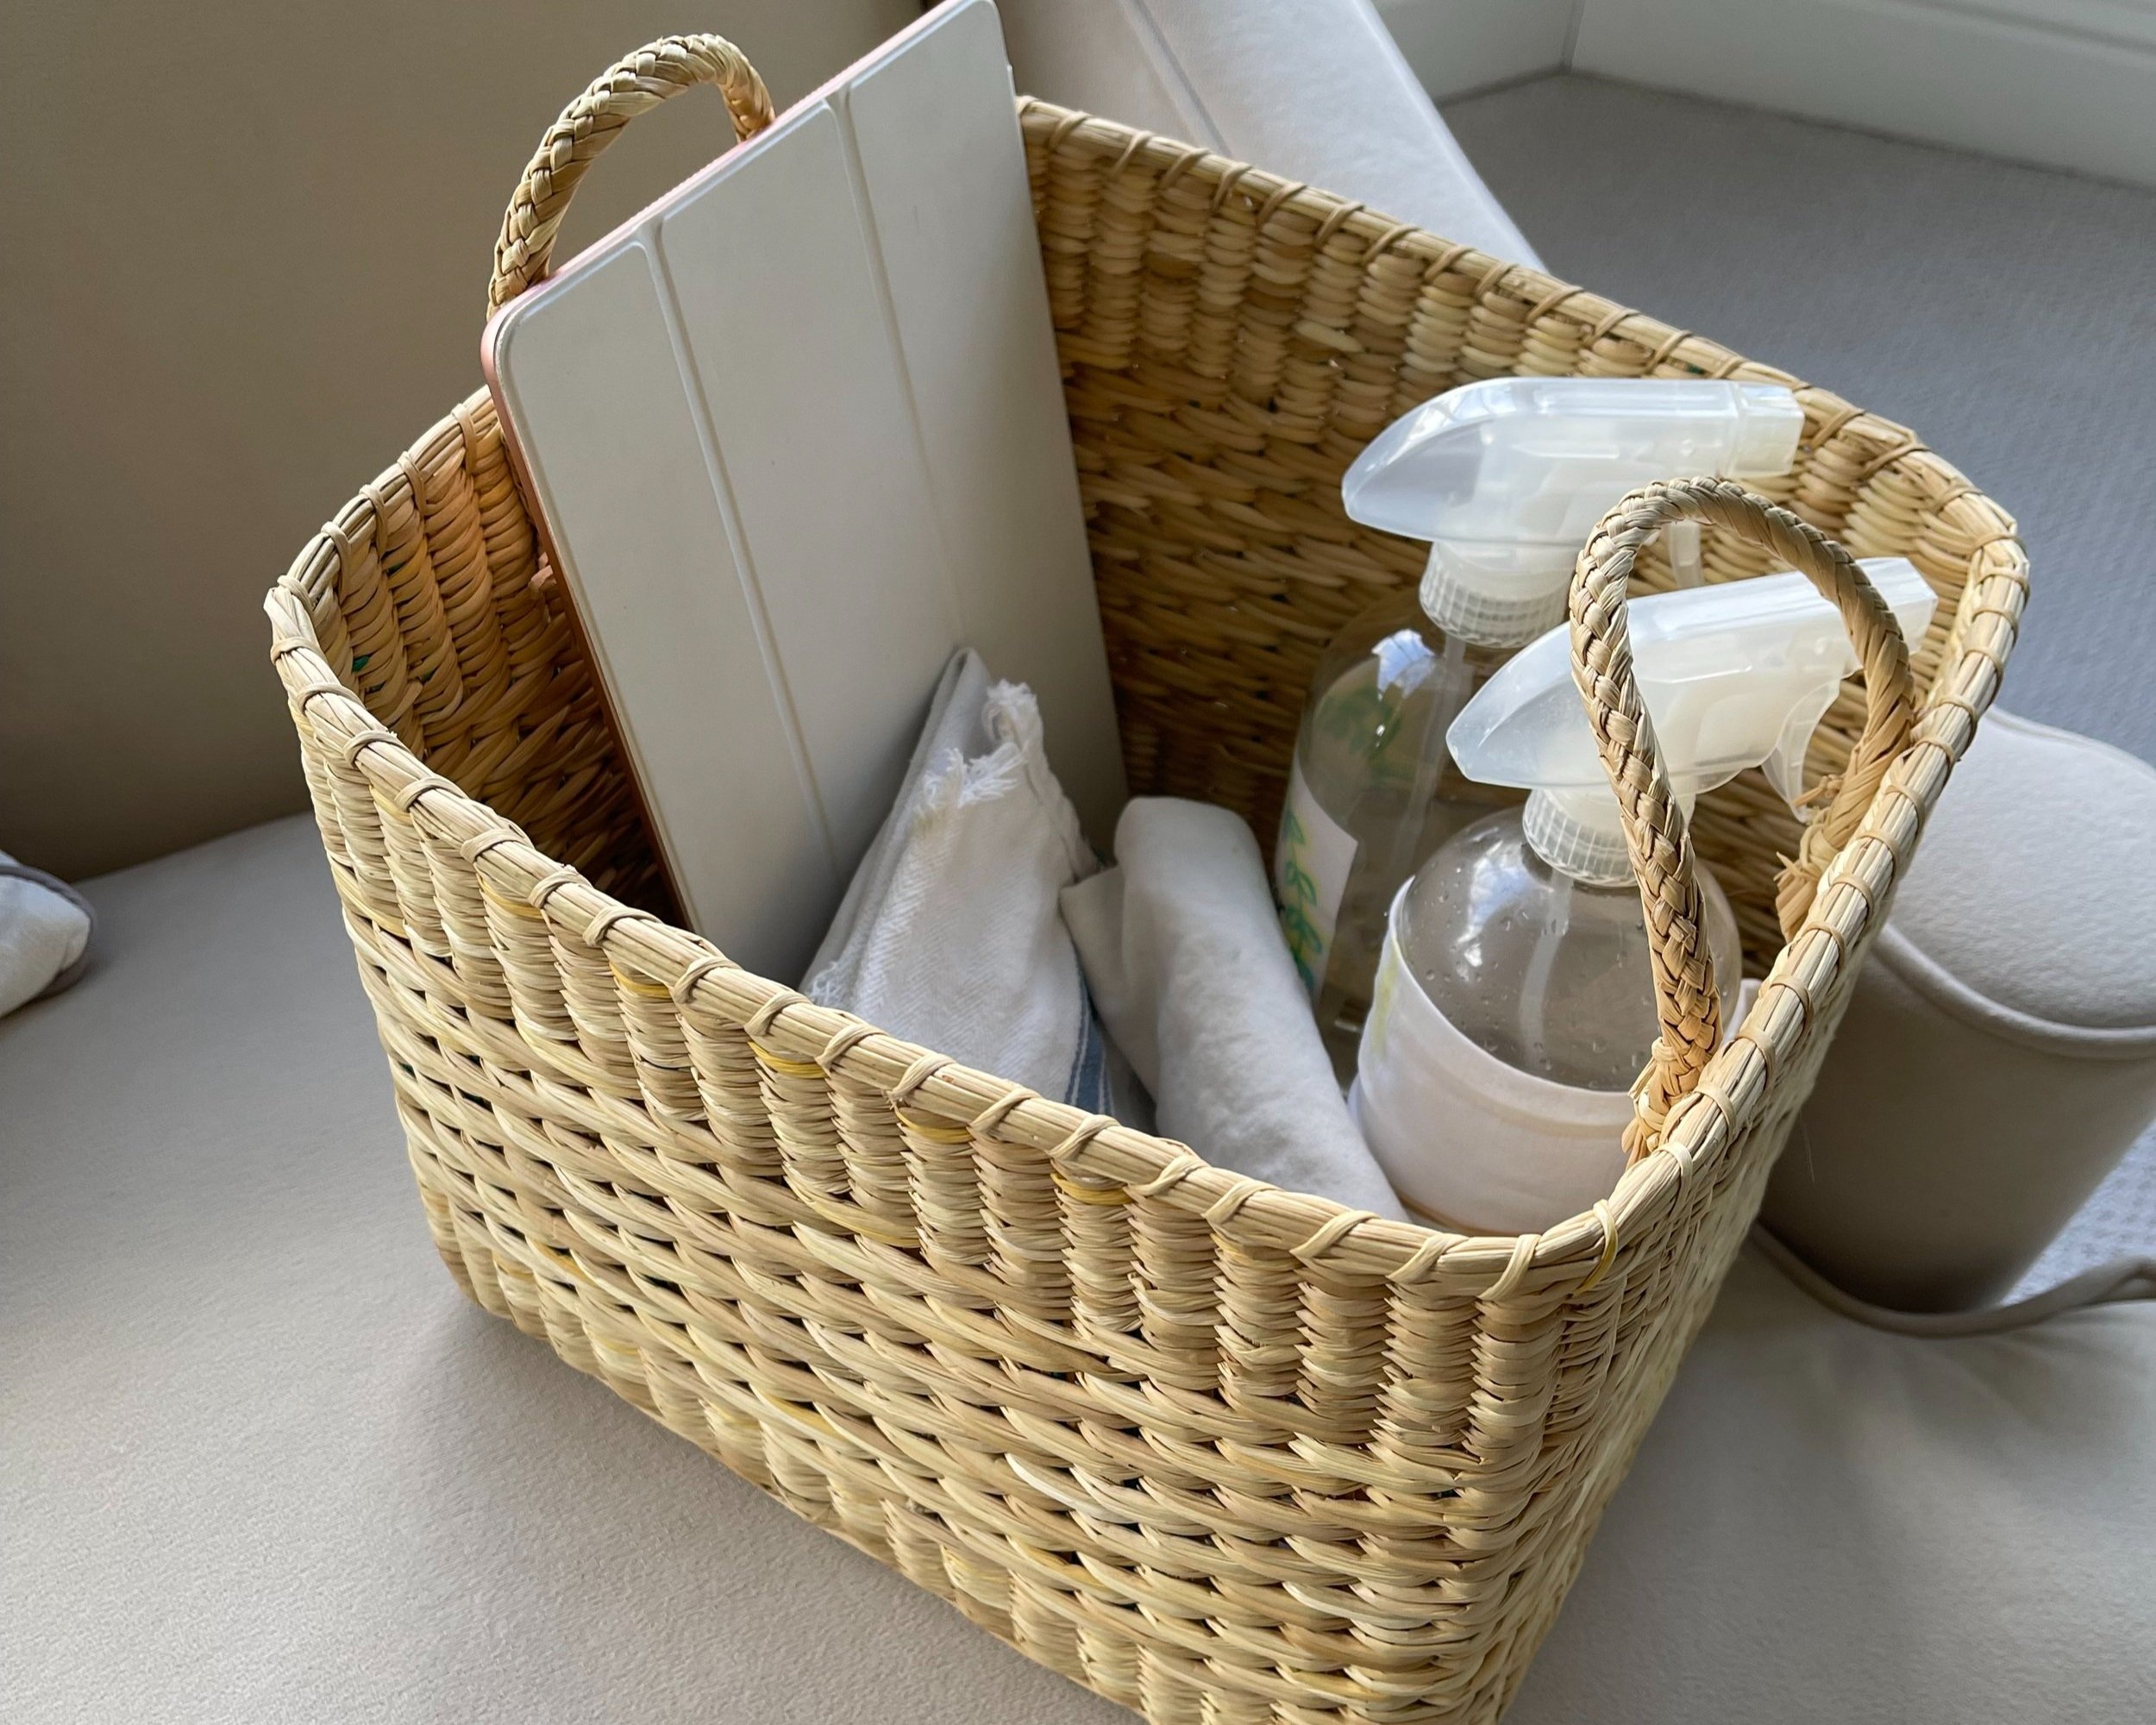 The Pottering Basket — The Calm Homemaker